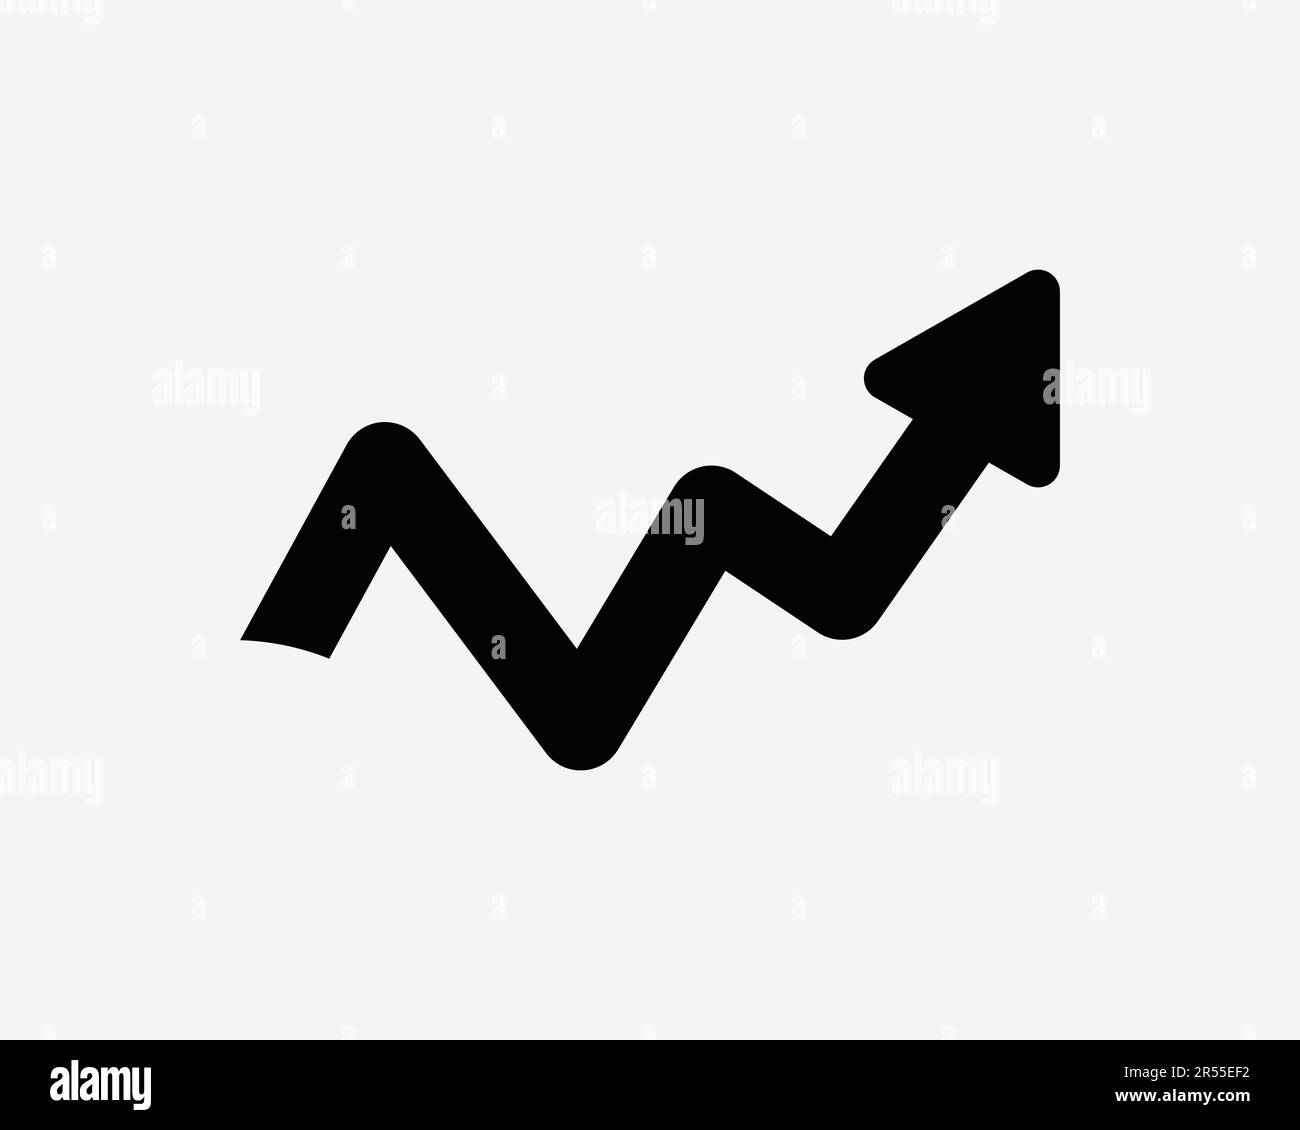 Stock Chart Arrow Line Icon. Growth Profit Market Economy Up Grow Increase Progress Sign Symbol Black Artwork Graphic Illustration Clipart EPS Vector Stock Vector